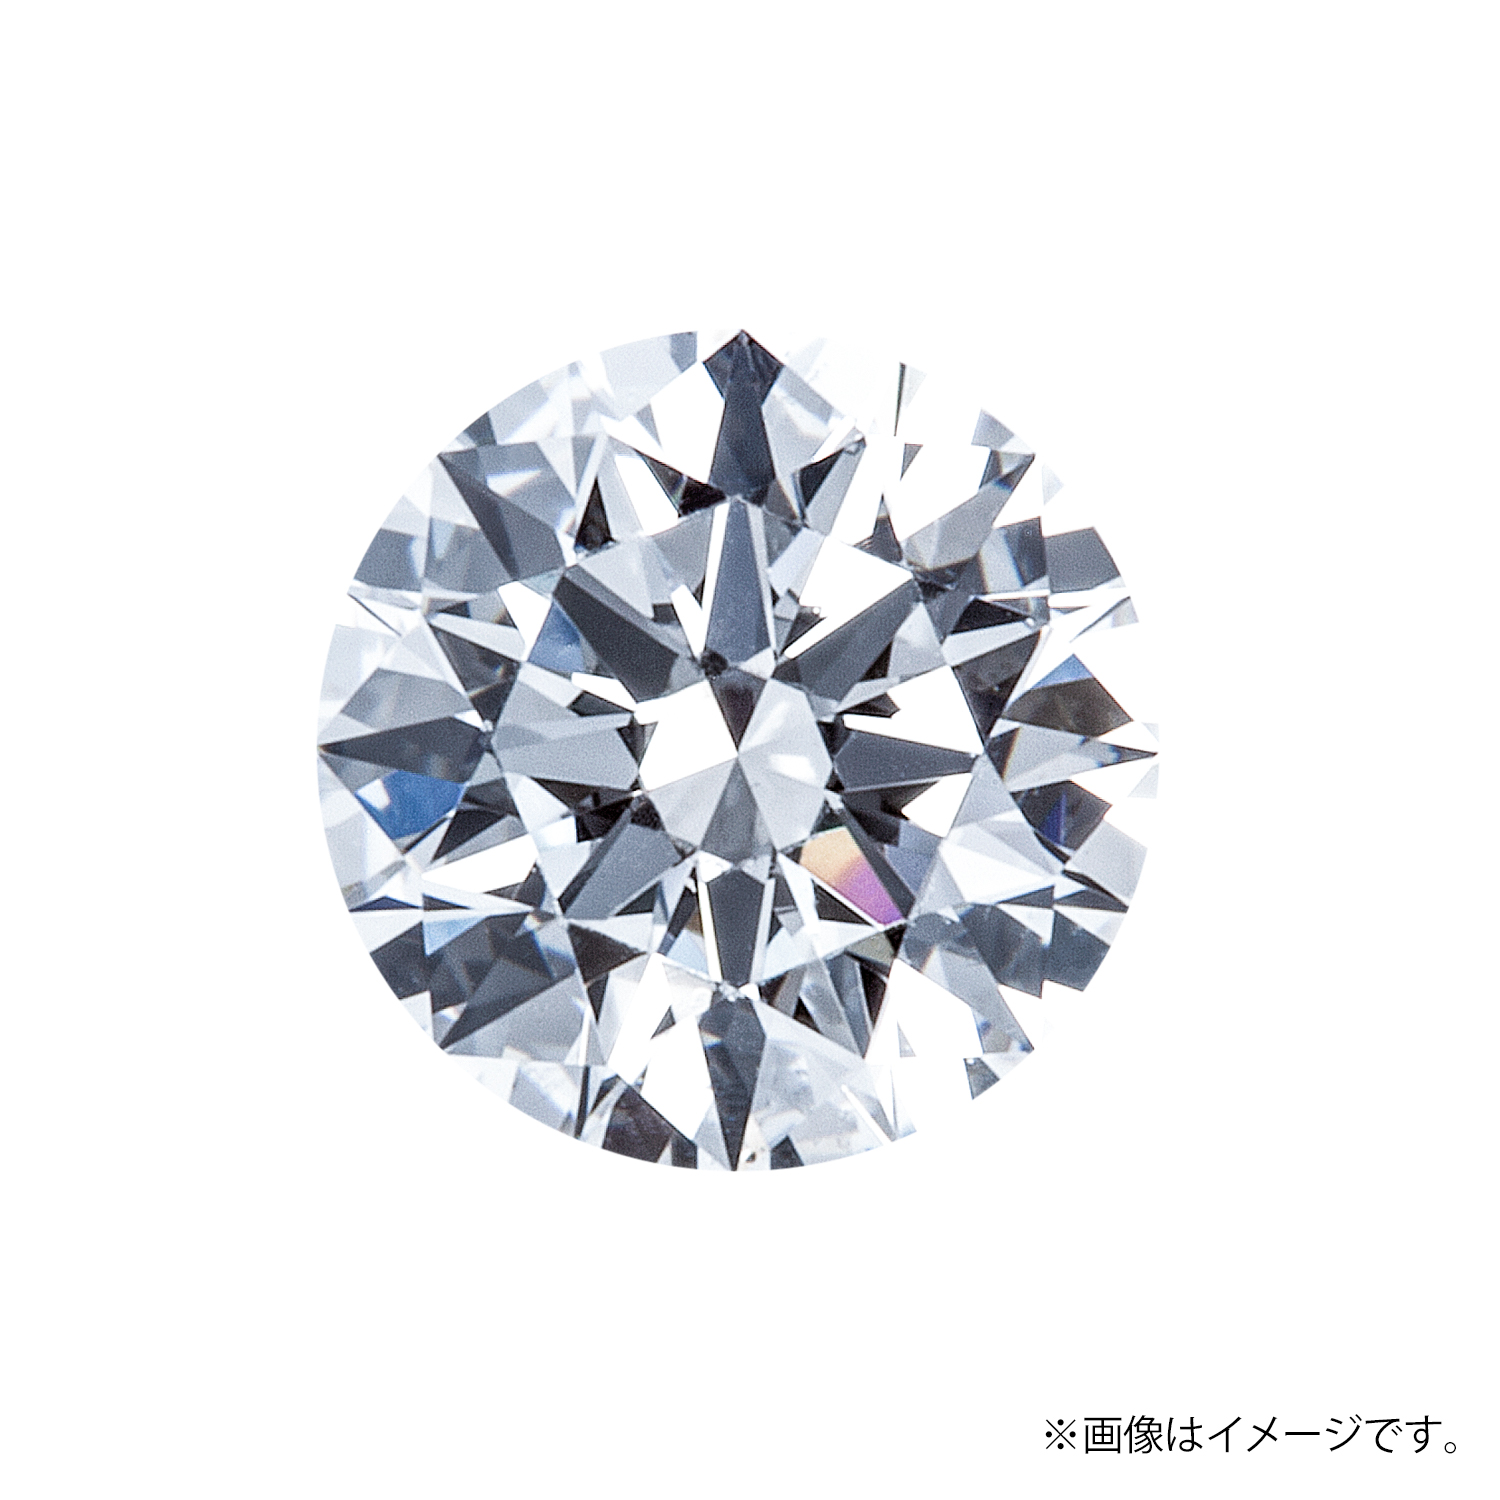 0.353ct Round ダイヤモンド / E / SI1 / EX-H&C